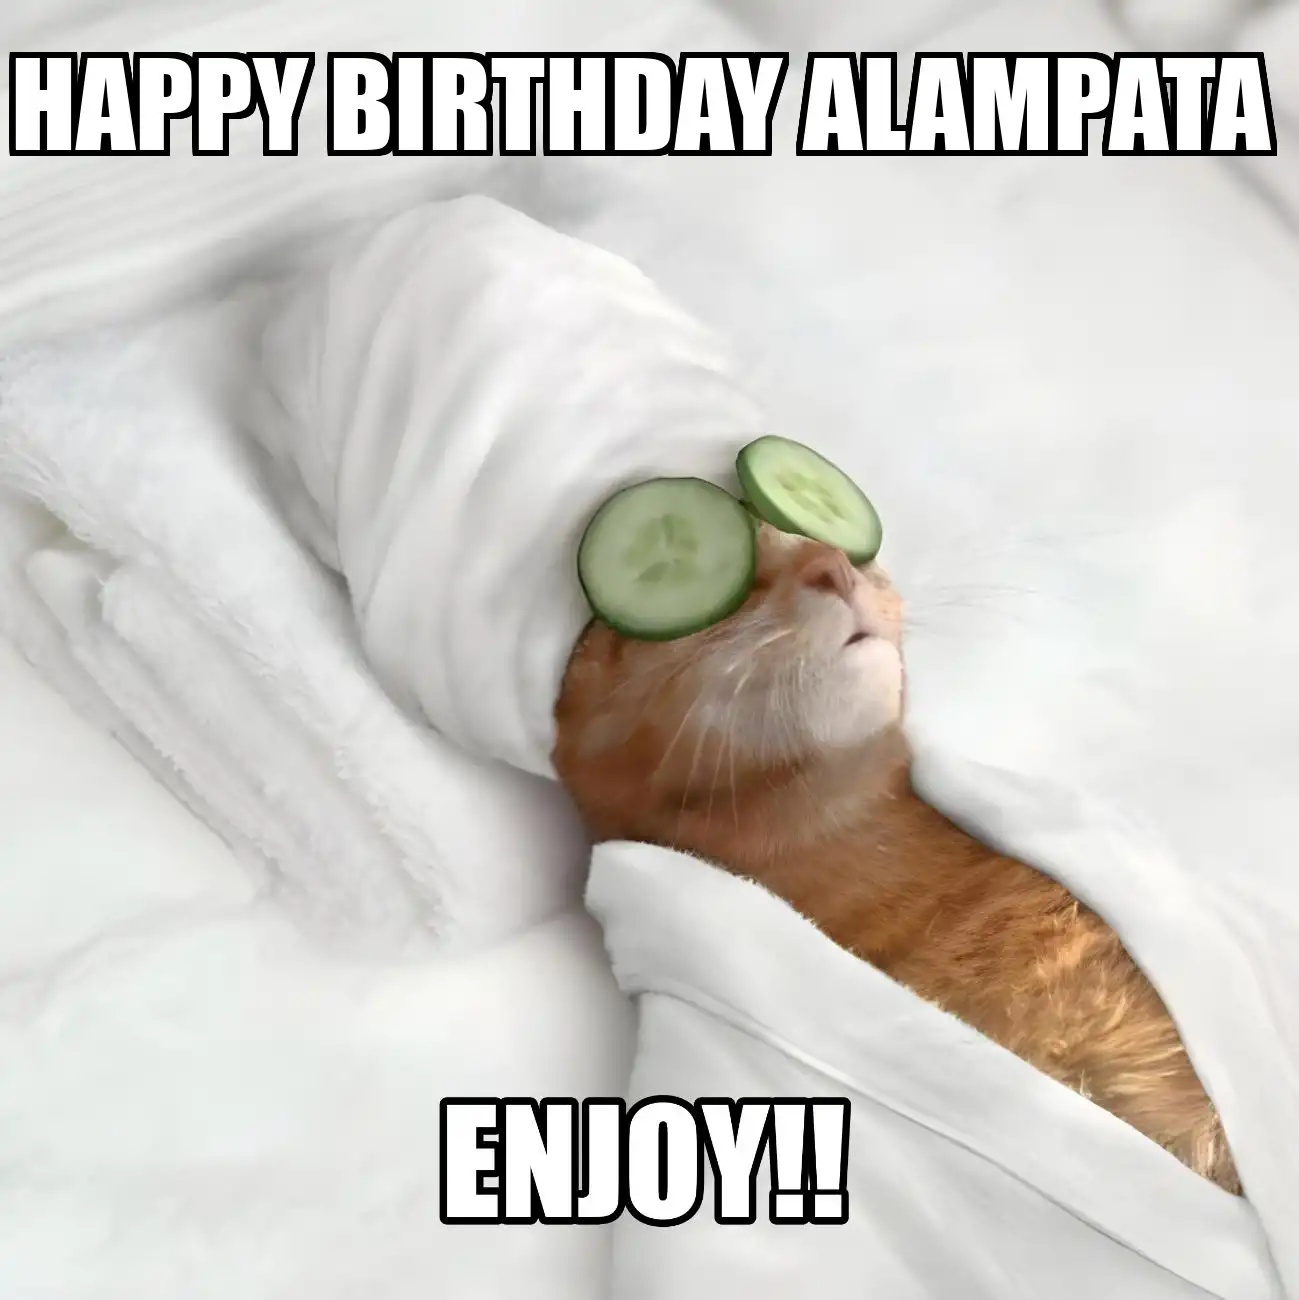 Happy Birthday Alampata Enjoy Cat Meme